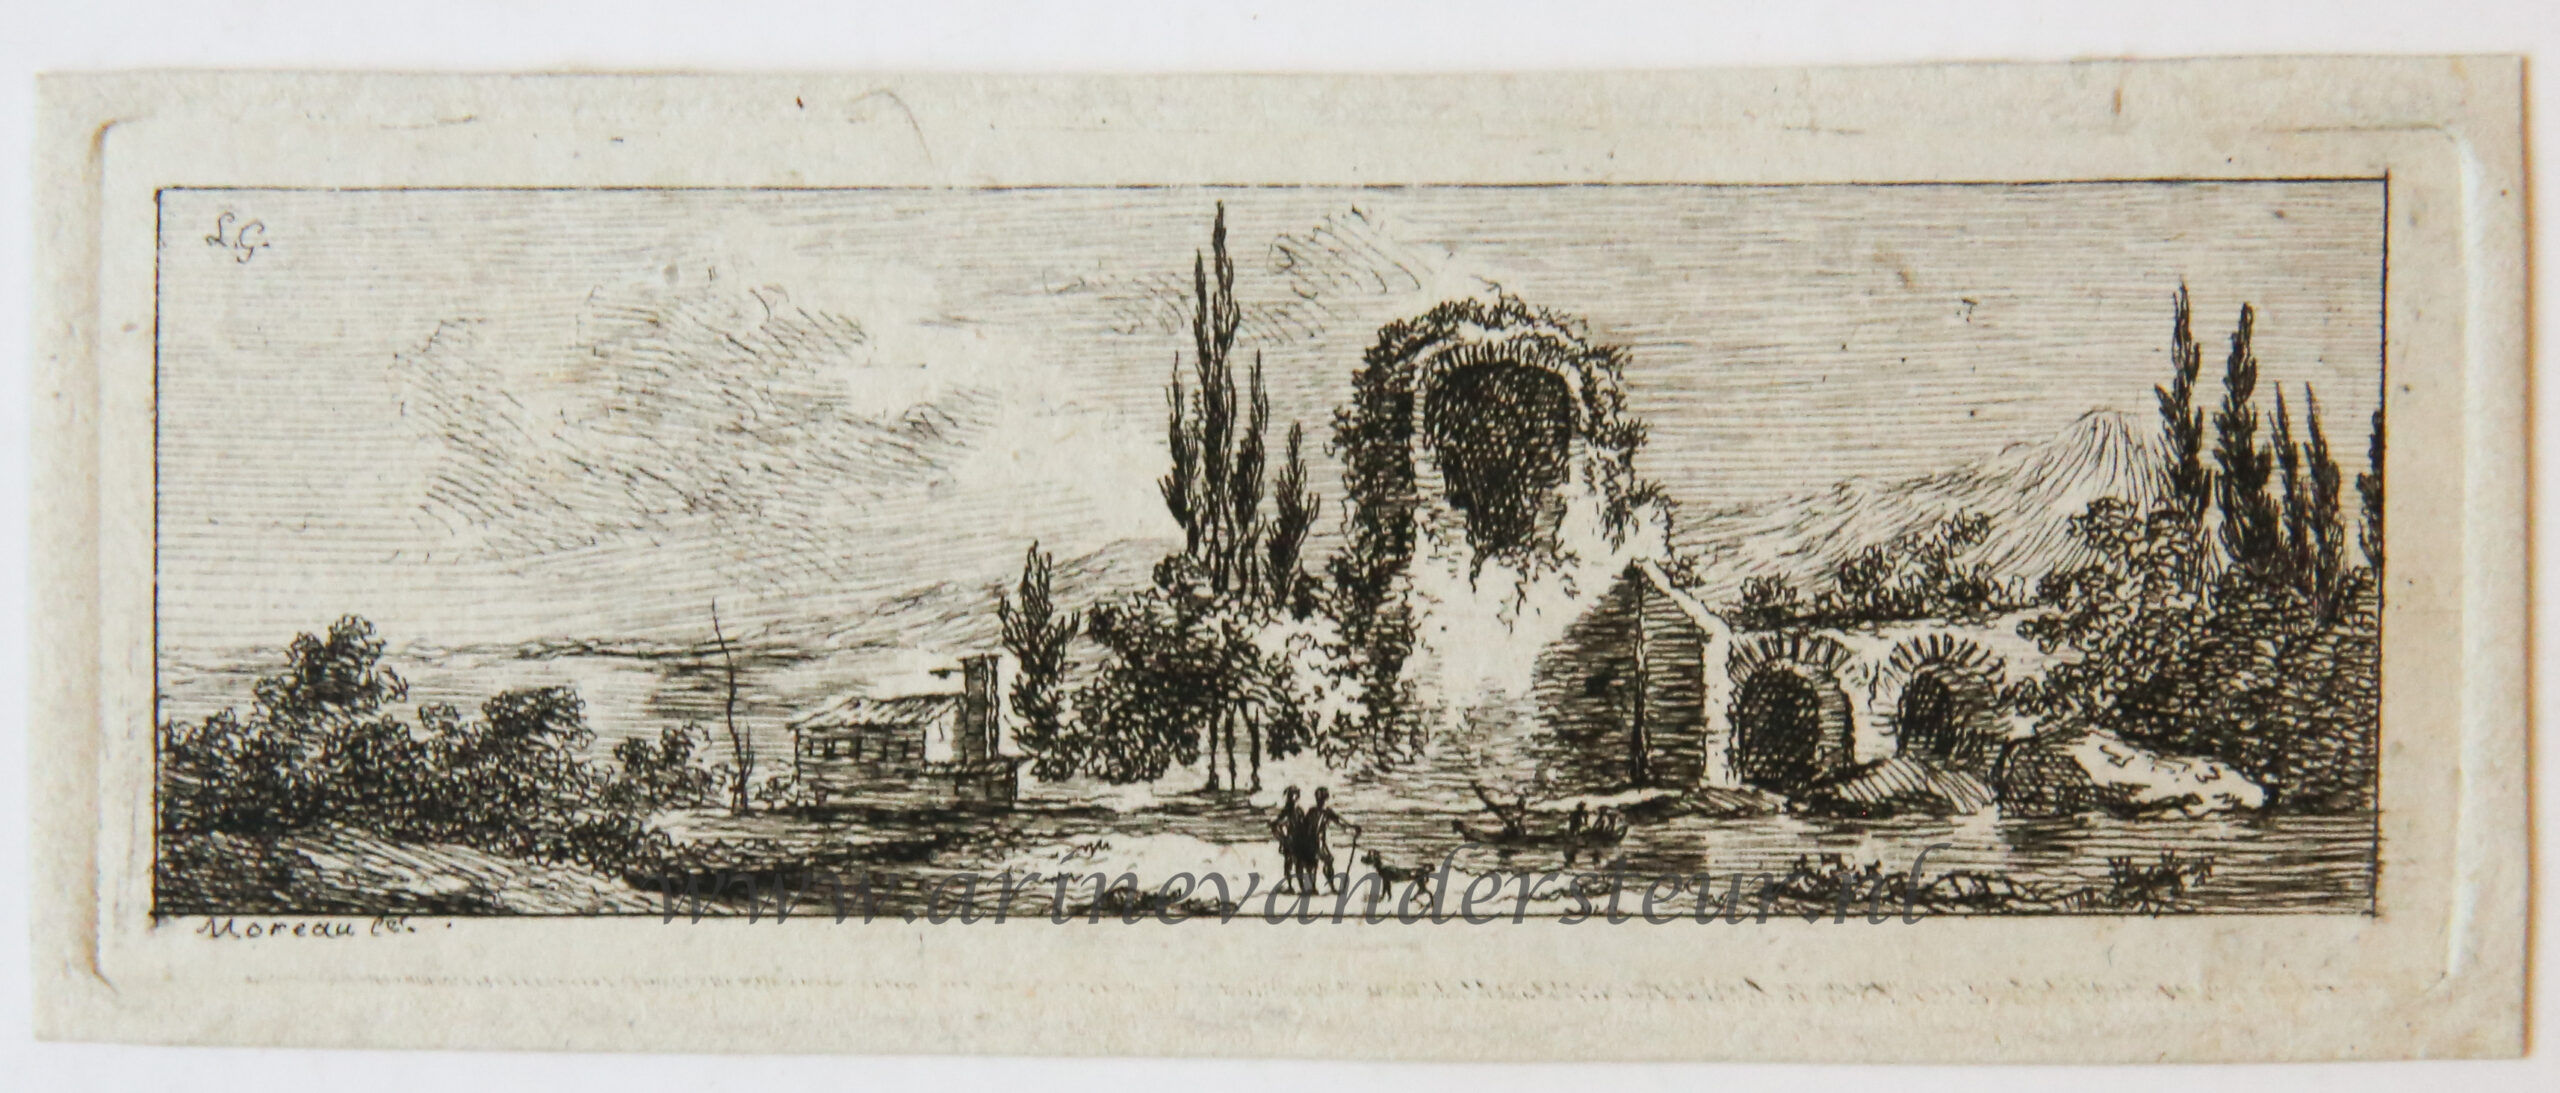 [Miniature antique print, etching] Salvator Legros, after Moreau, Landscape with ruins, published ca. 1788.